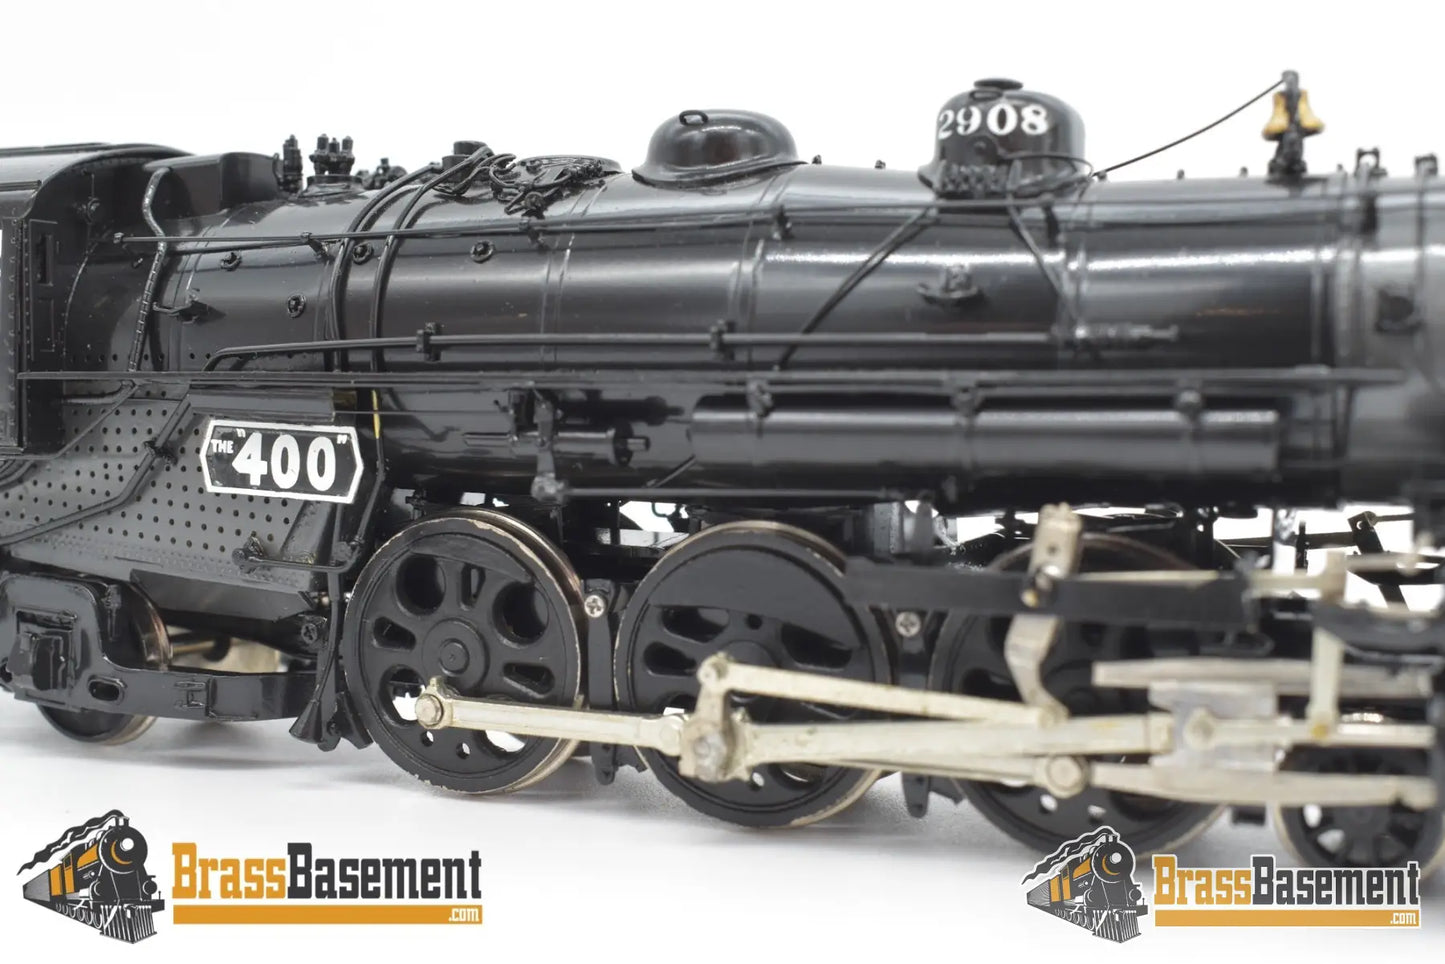 Ho Brass - Omi 1491.1 C&Nw Chicago & Northwestern 4 - 6 - 2 E2A Oil Tender C/Pomi Steam